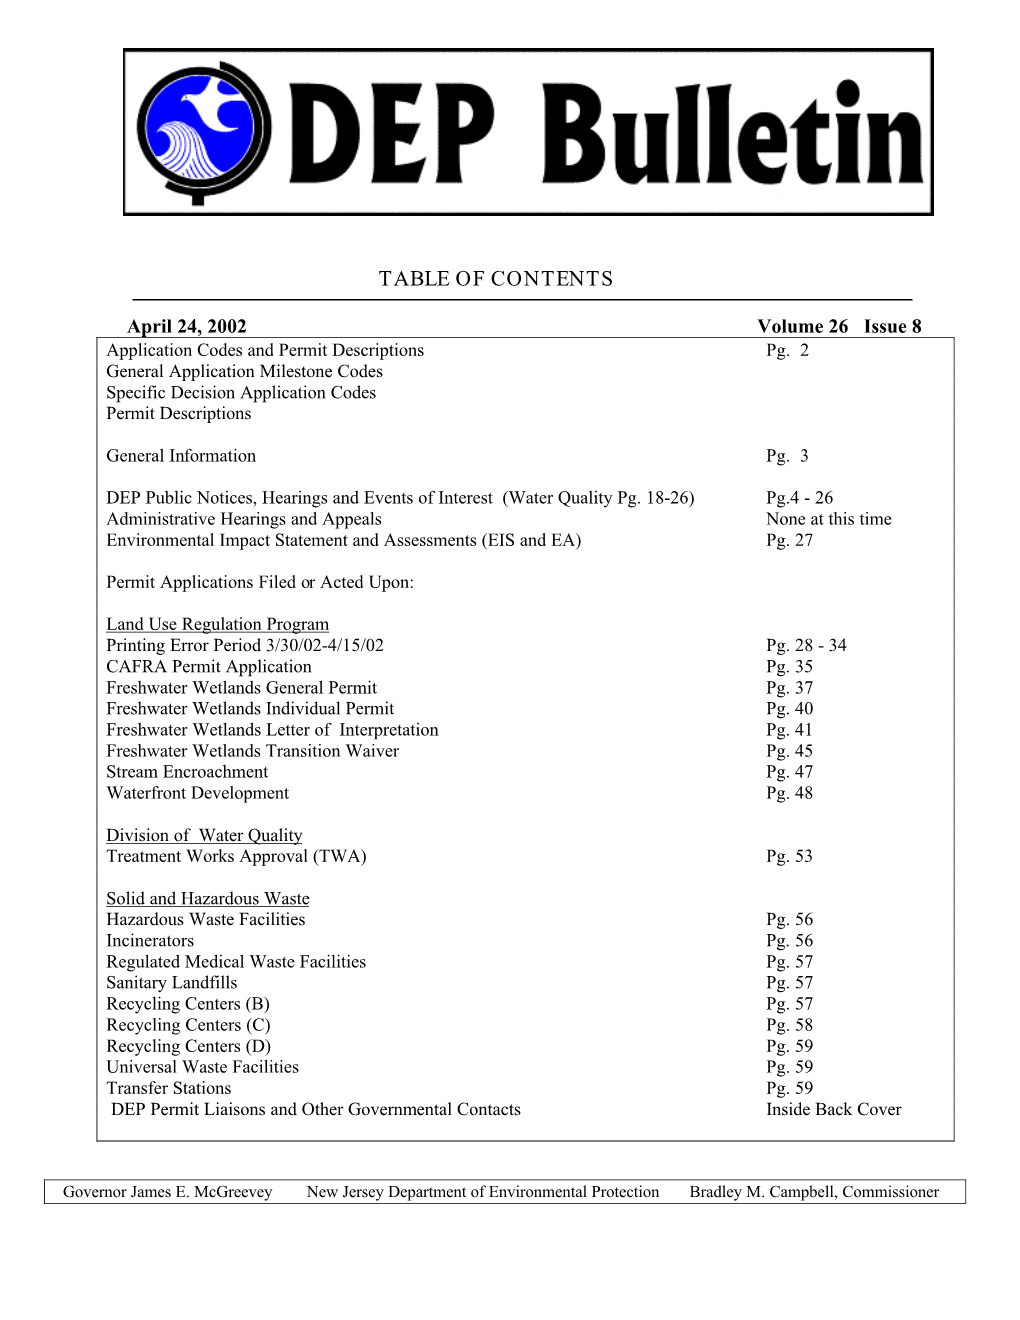 NJDEP-DEP Bulletin